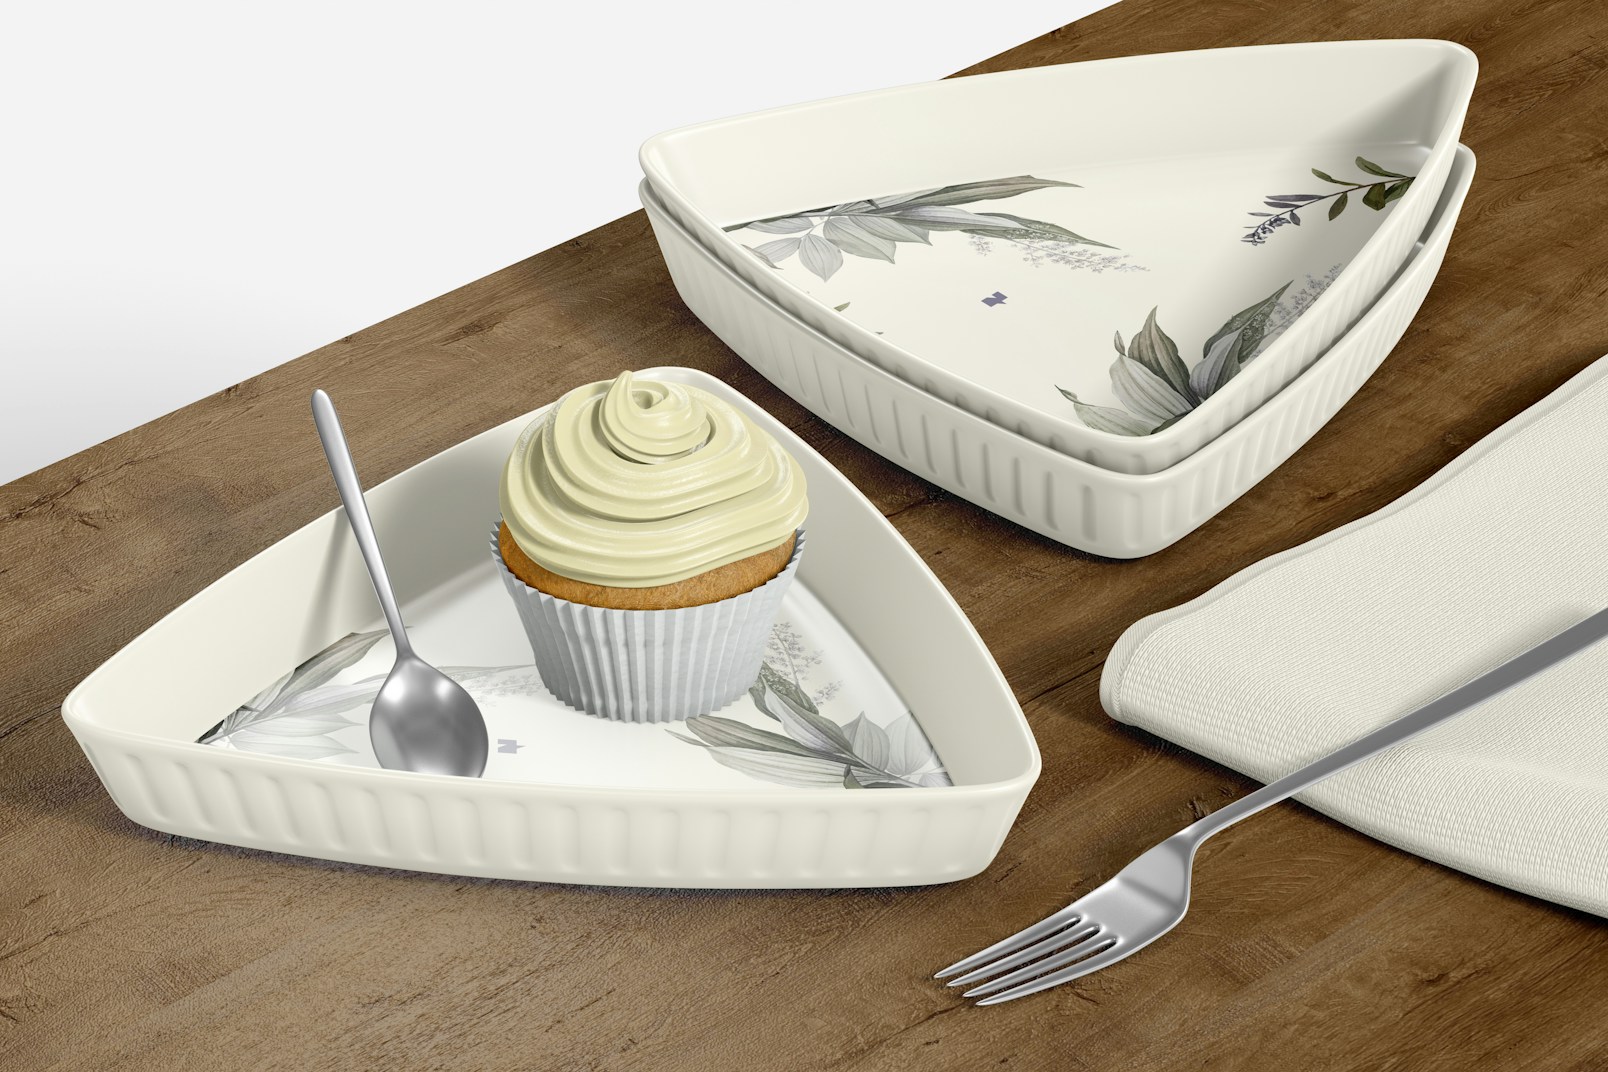 Ceramic Triangle Plate with Cupcake Mockup